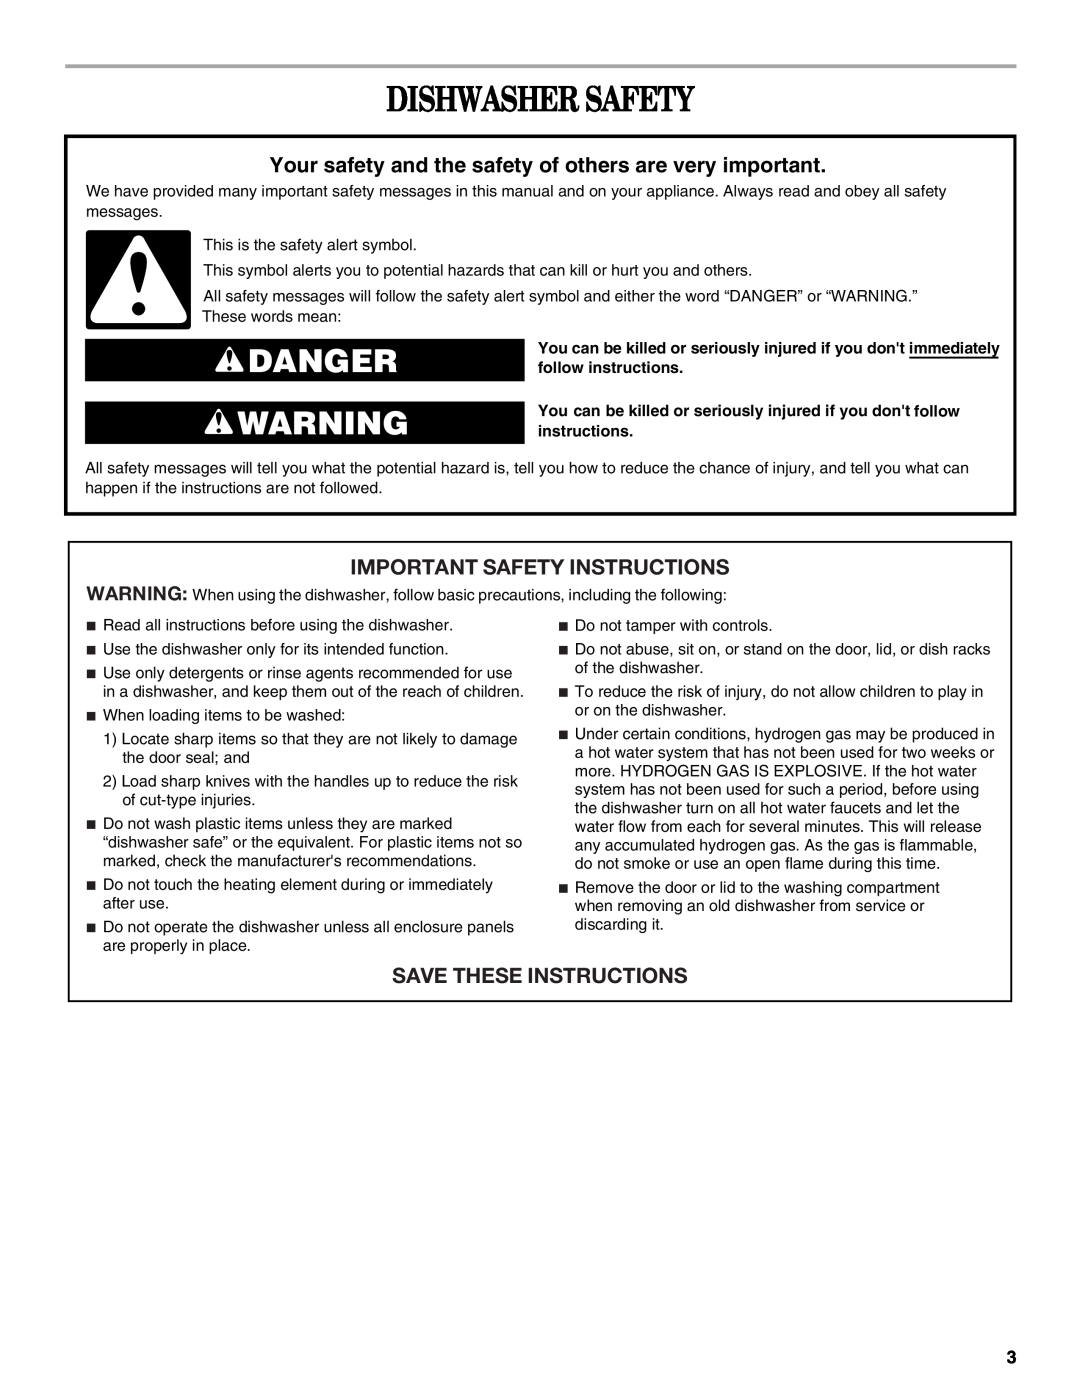 Whirlpool DU850, DU811, DU810 manual Dishwasher Safety, Danger, Important Safety Instructions, Save These Instructions 